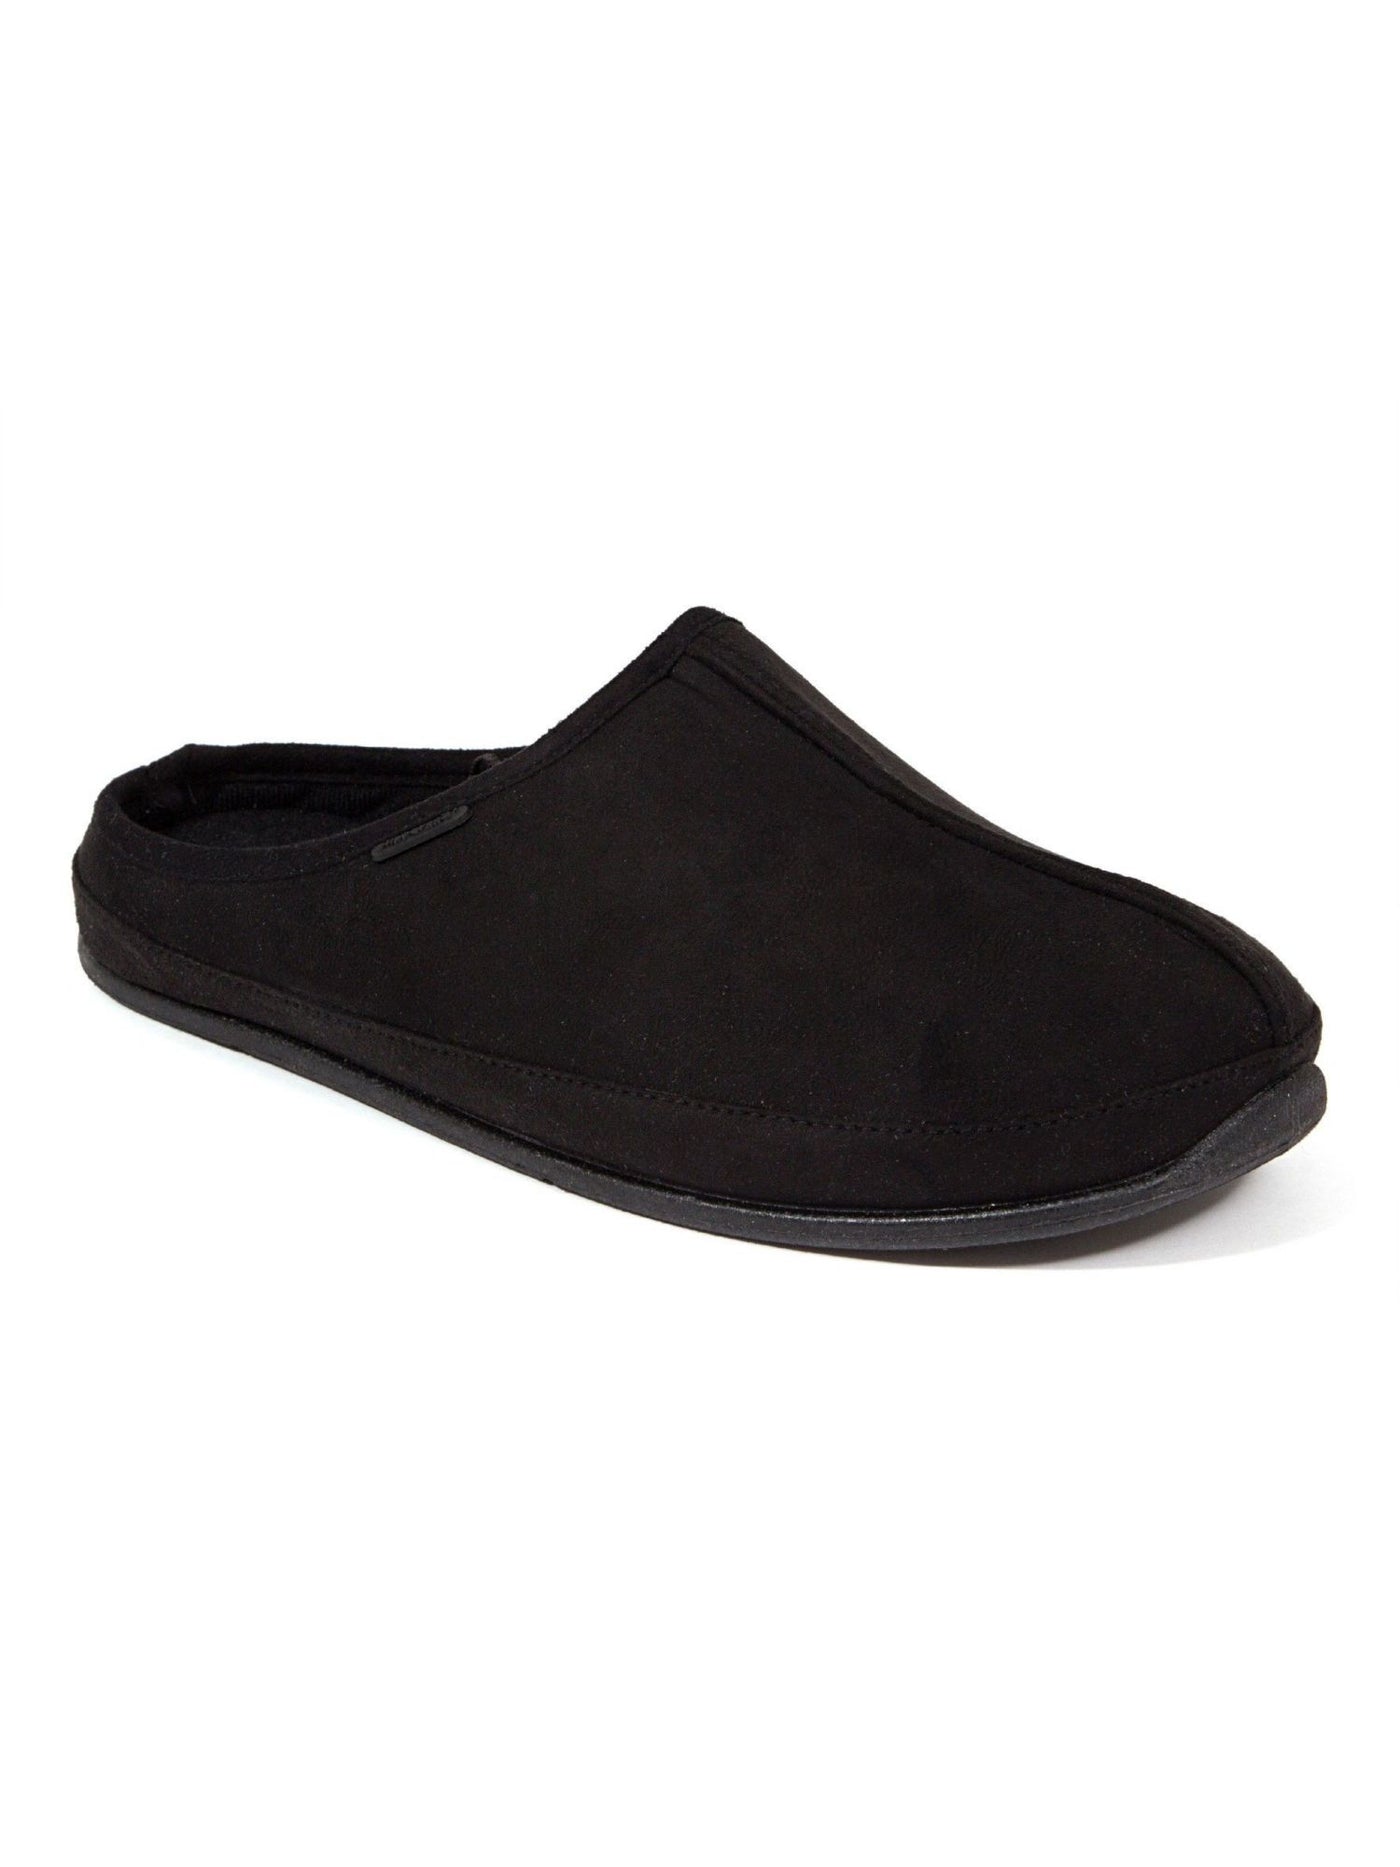 DEER STAGS SLIPPEROOZ Mens Black Shock Absorption Comfort Wherever Round Toe Slip On Slippers Shoes 9 W